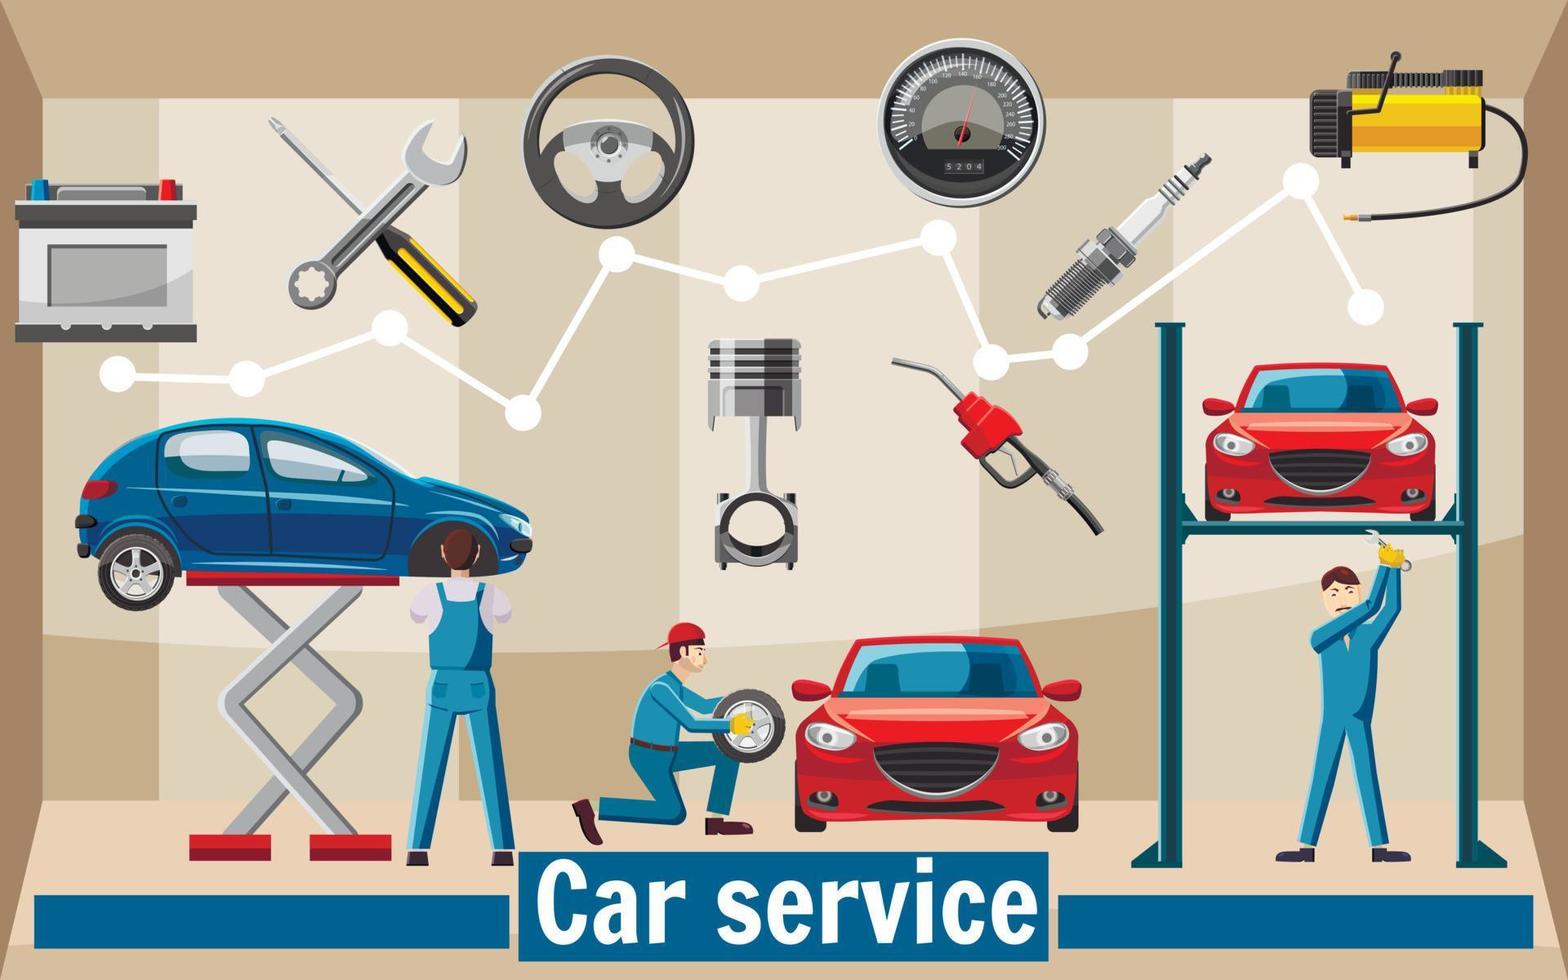 Car service tools concept, cartoon style vector